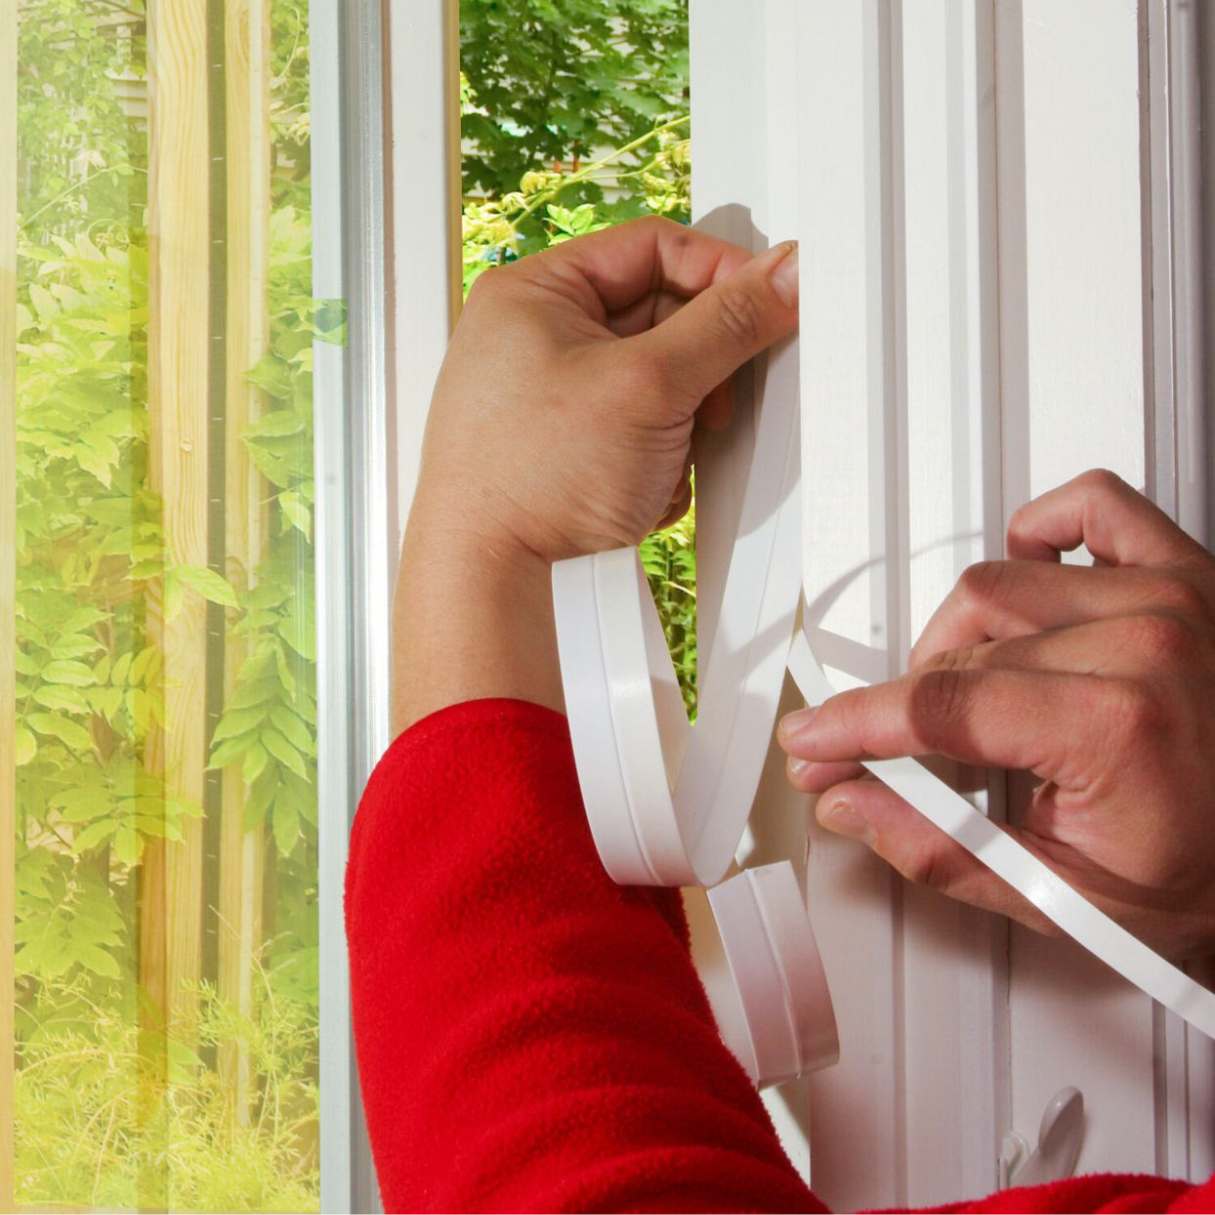 Weatherstripping Doors Increases Home Energy Efficiency